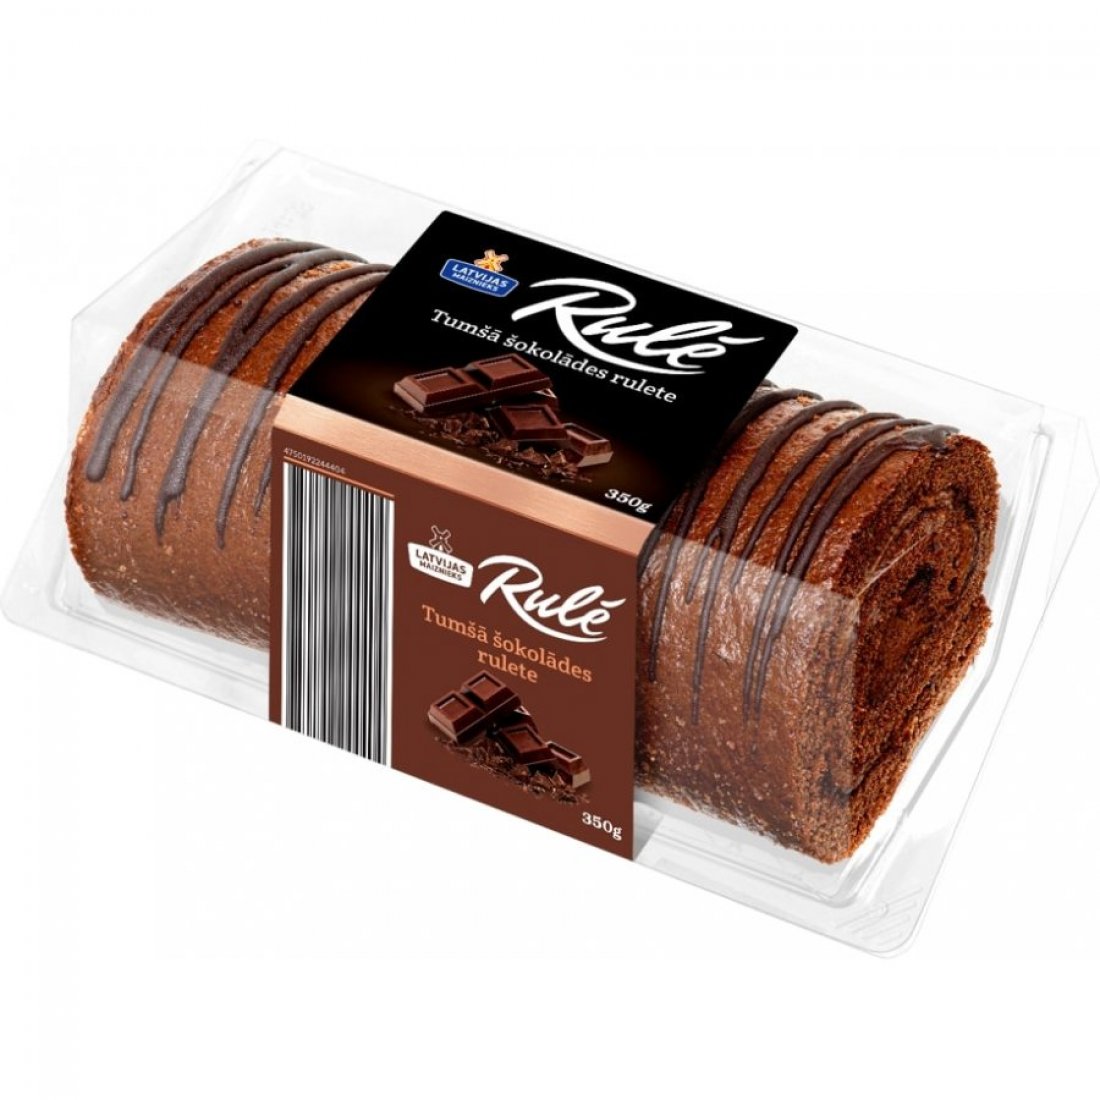 NEW! Dark chocolate roll "RULĒ"